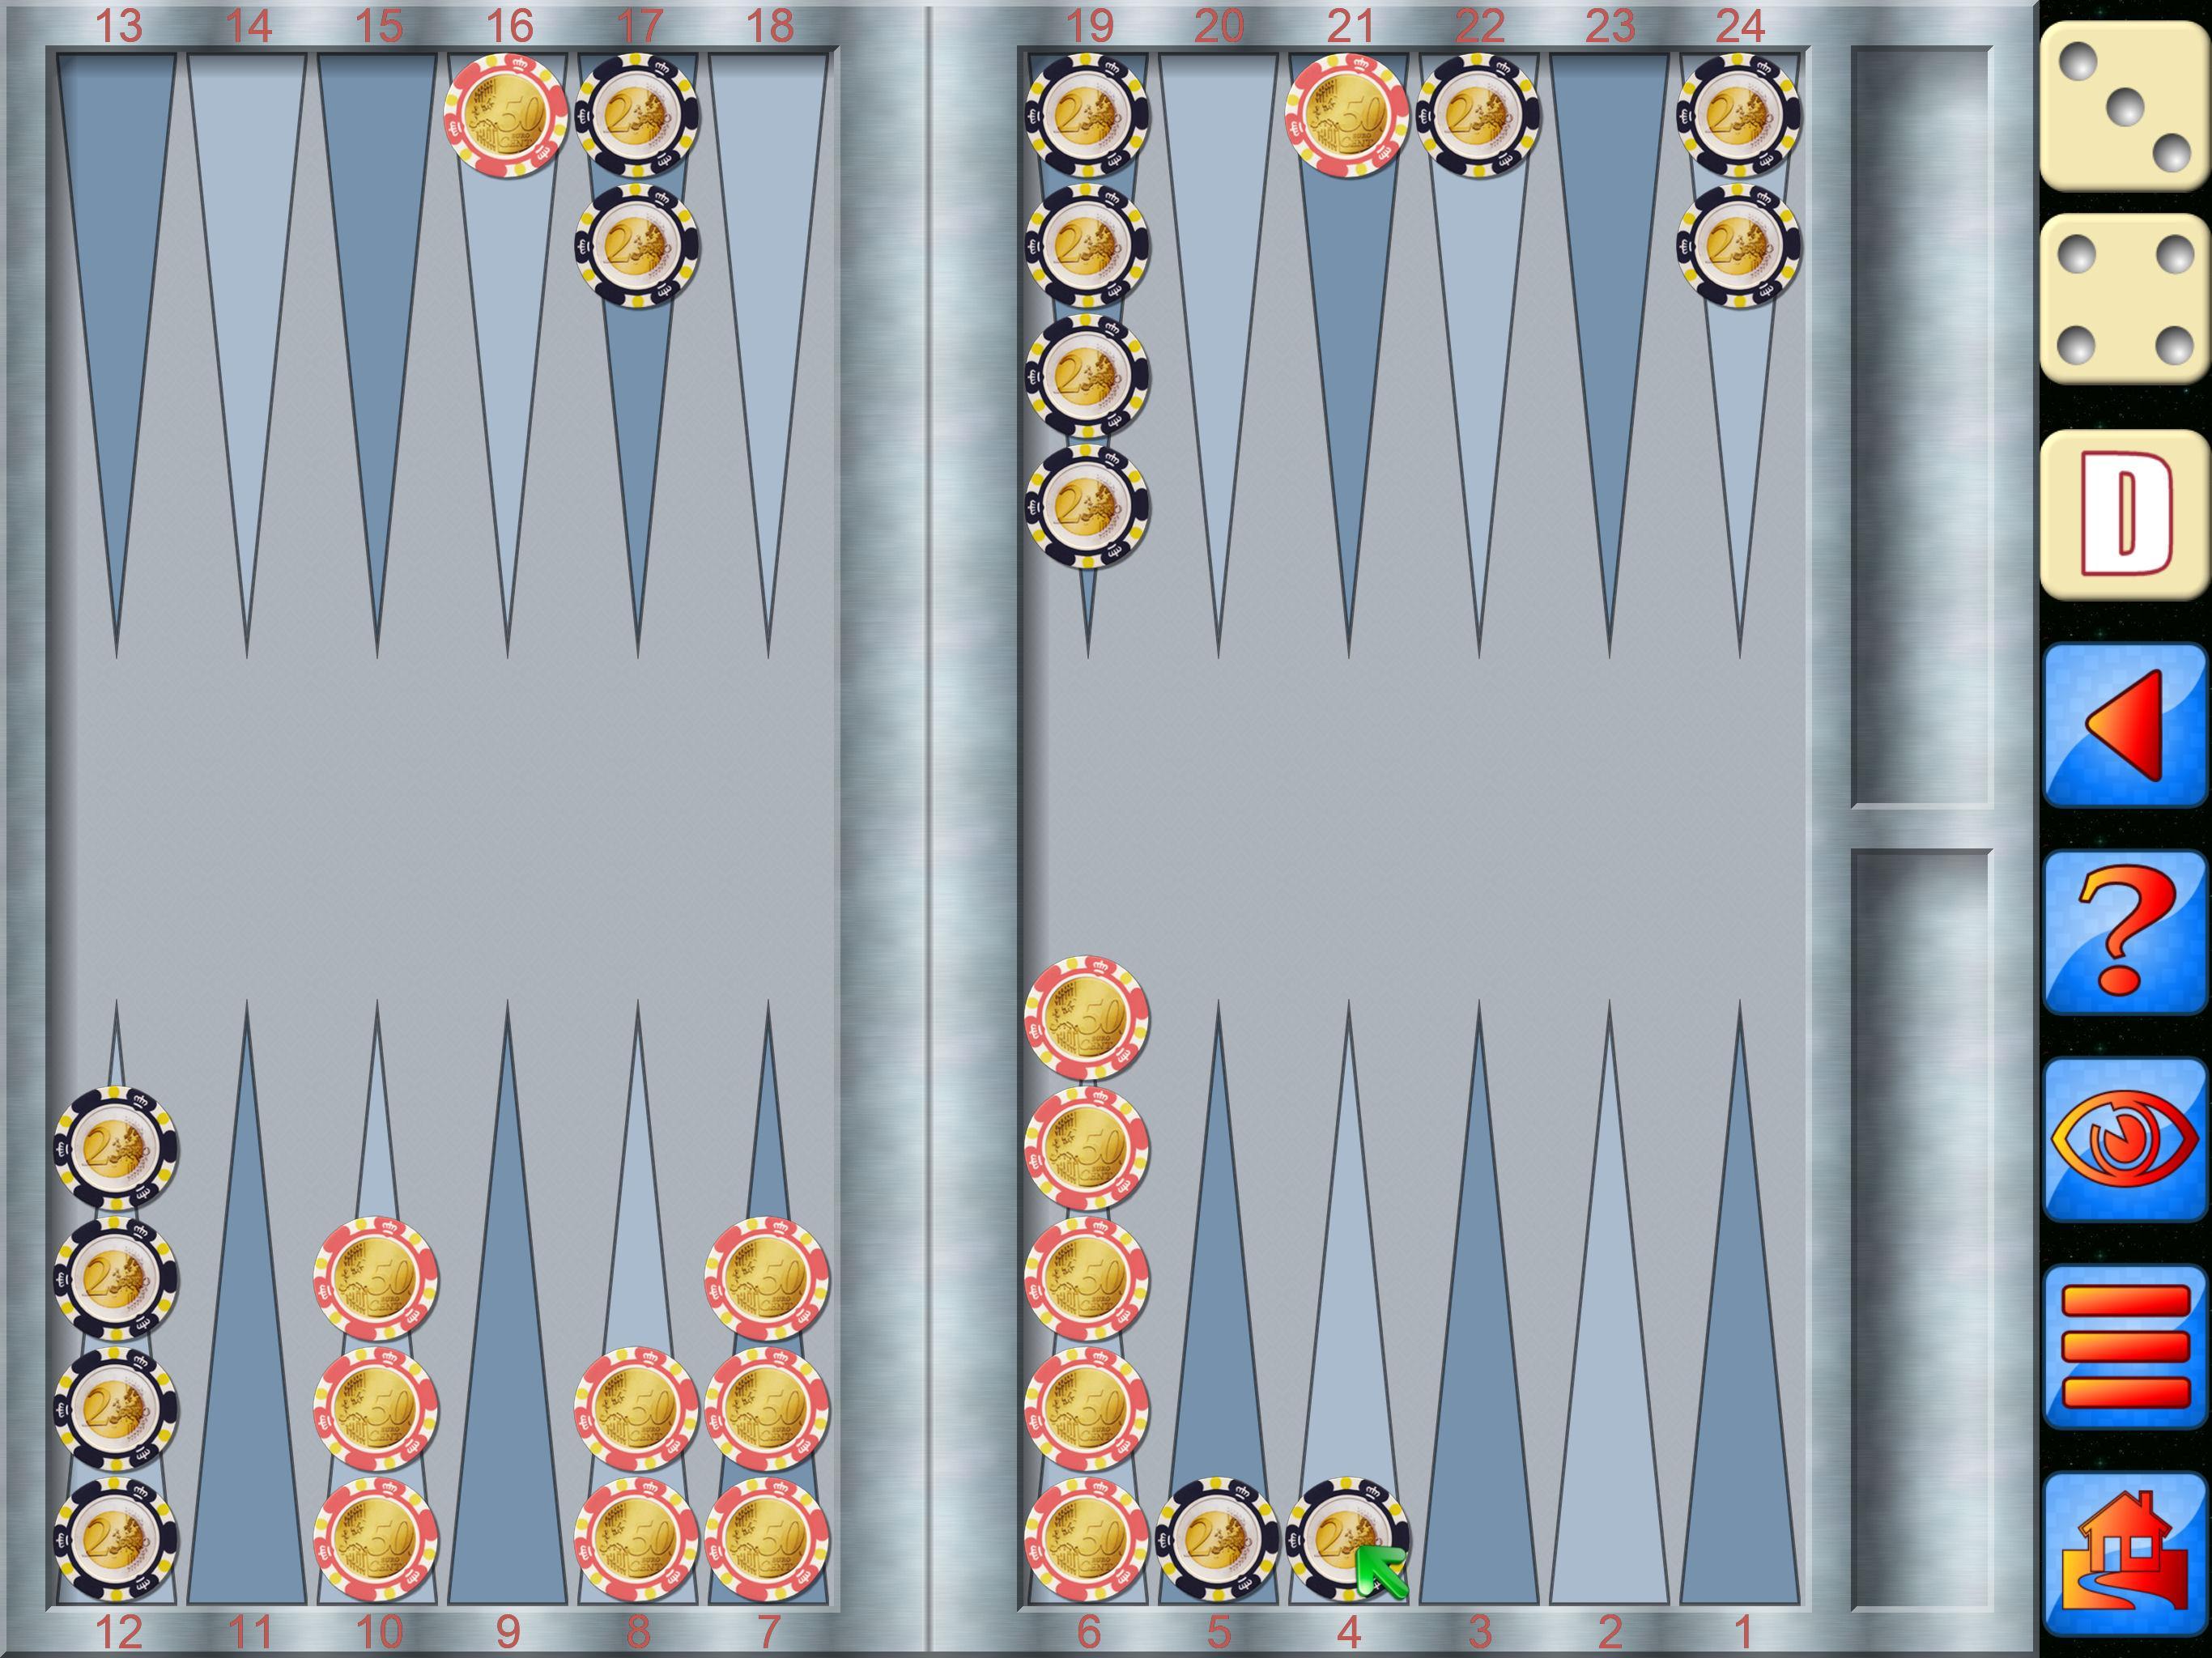 Backgammon V+, online multiplayer backgammon 5.25.64 Screenshot 14